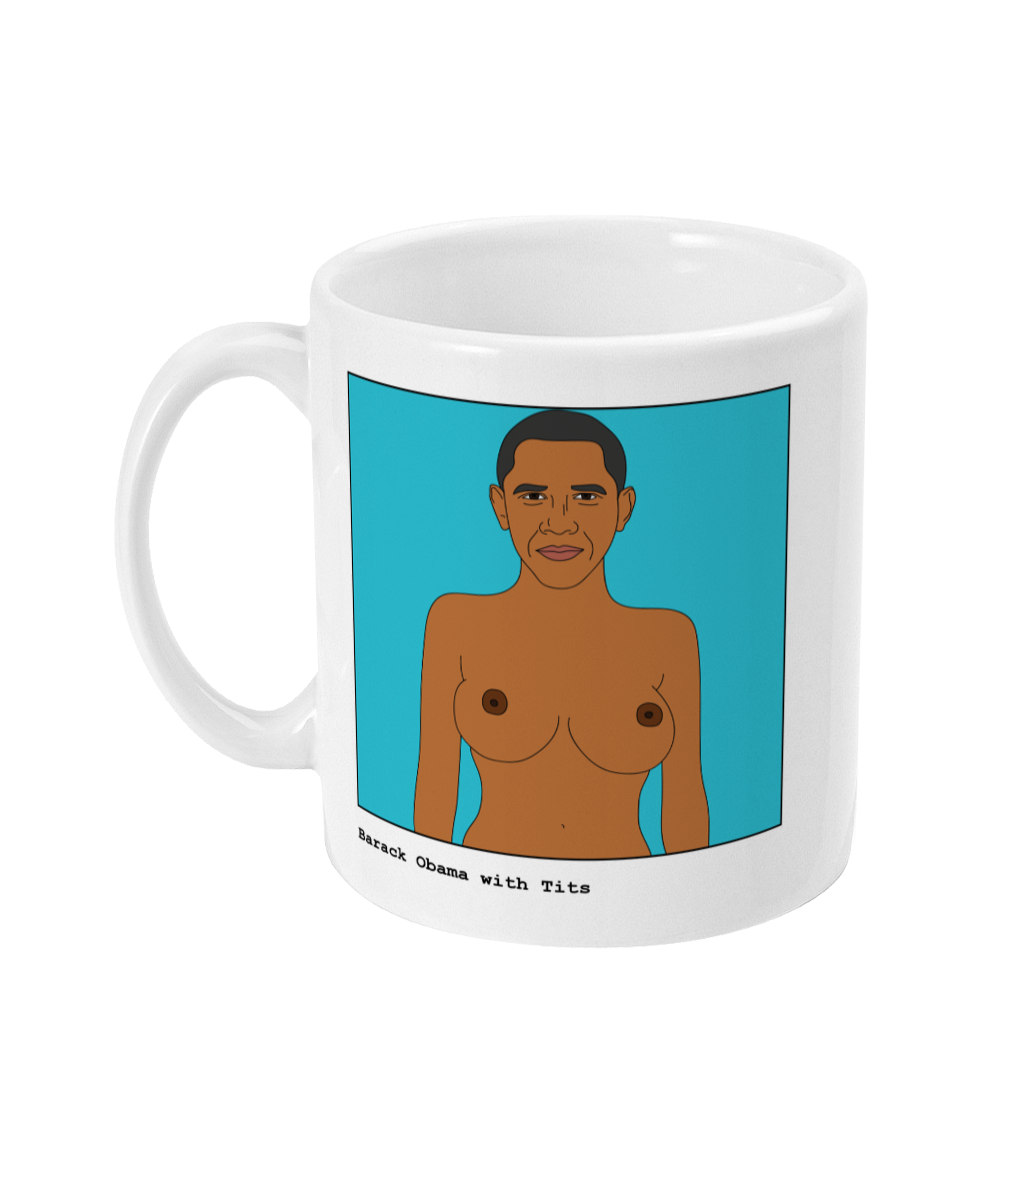 Barack Obama with Tits